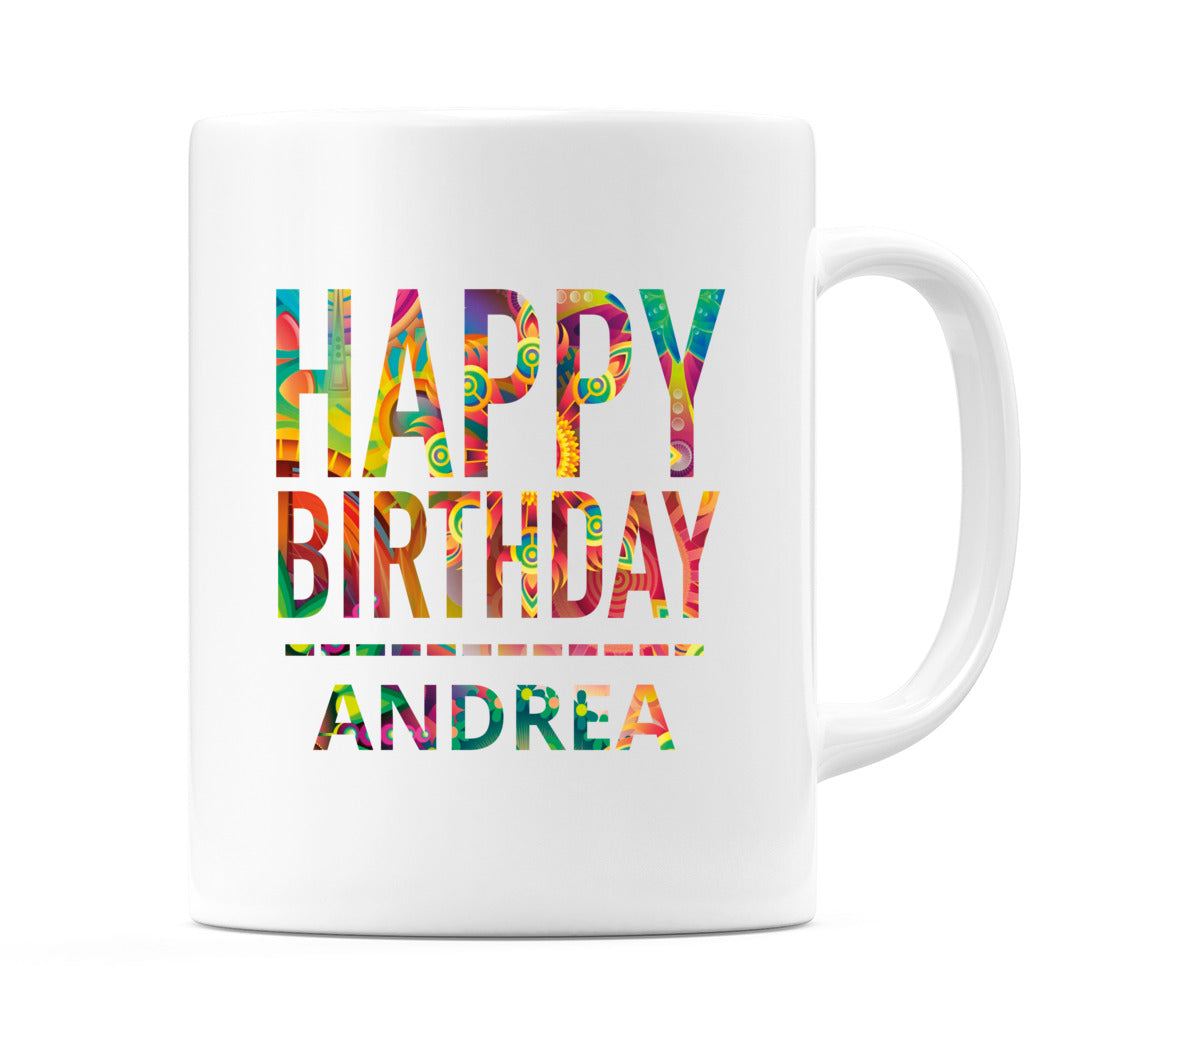 Happy Birthday Andrea (Tie Dye Effect) Mug Cup by WeDoMugs